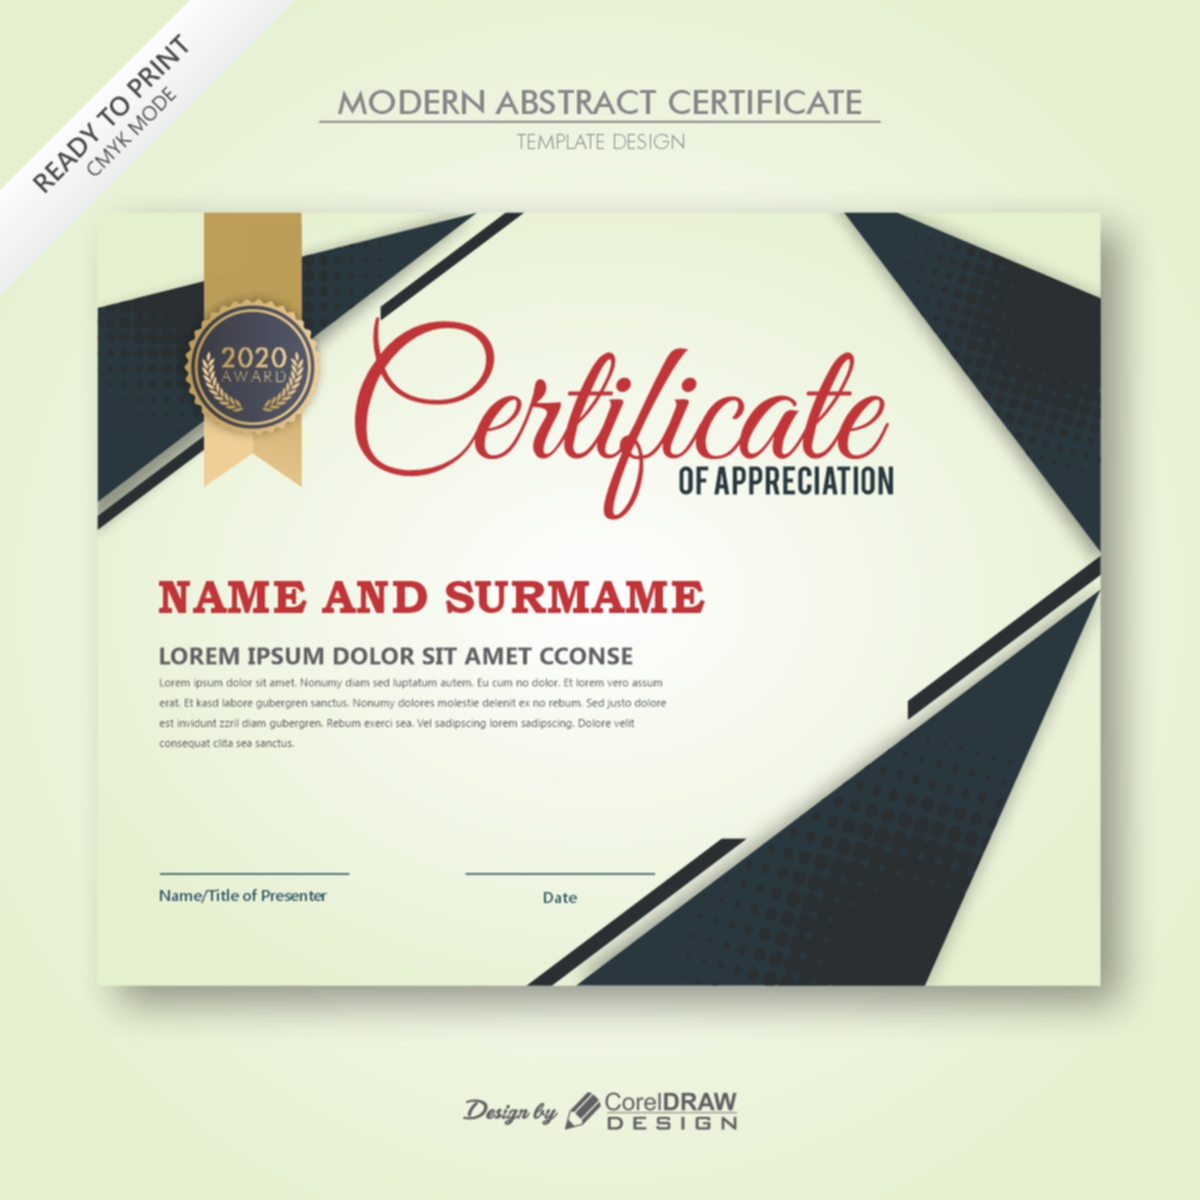 certificate design in coreldraw format